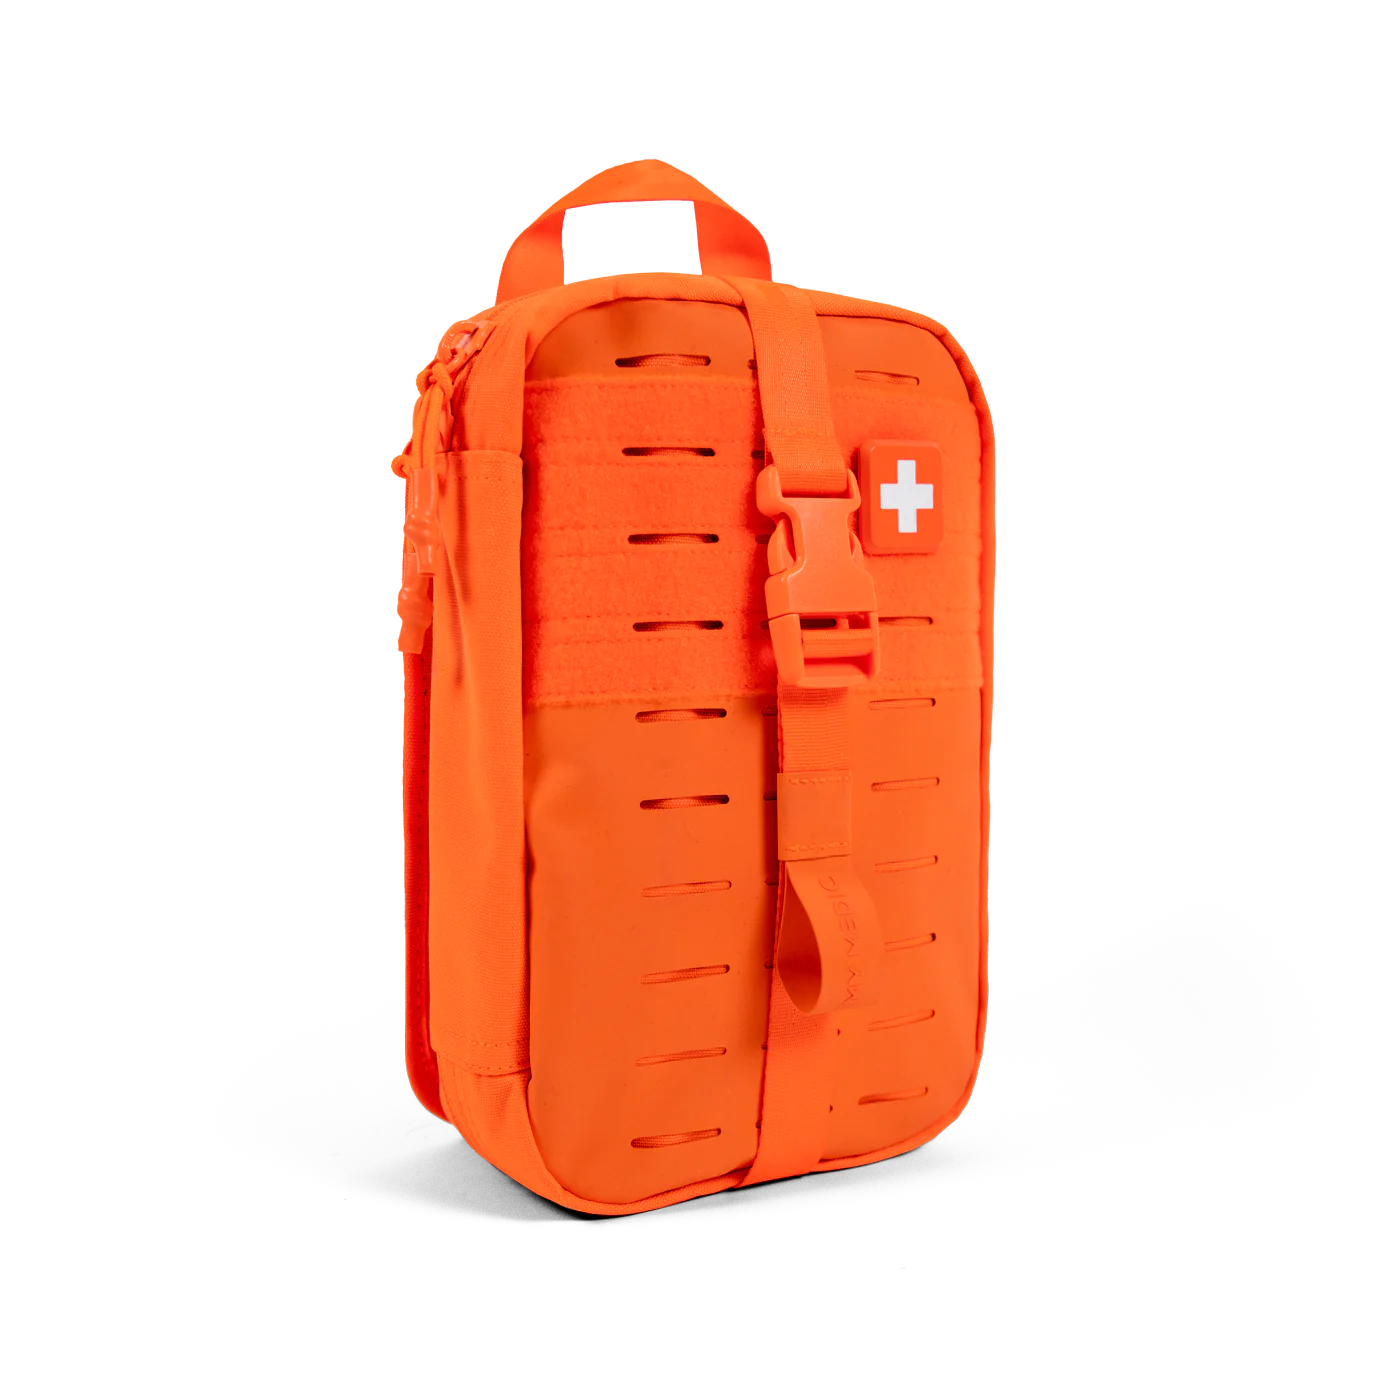 My Medic MYFAK Pro First Aid Kit